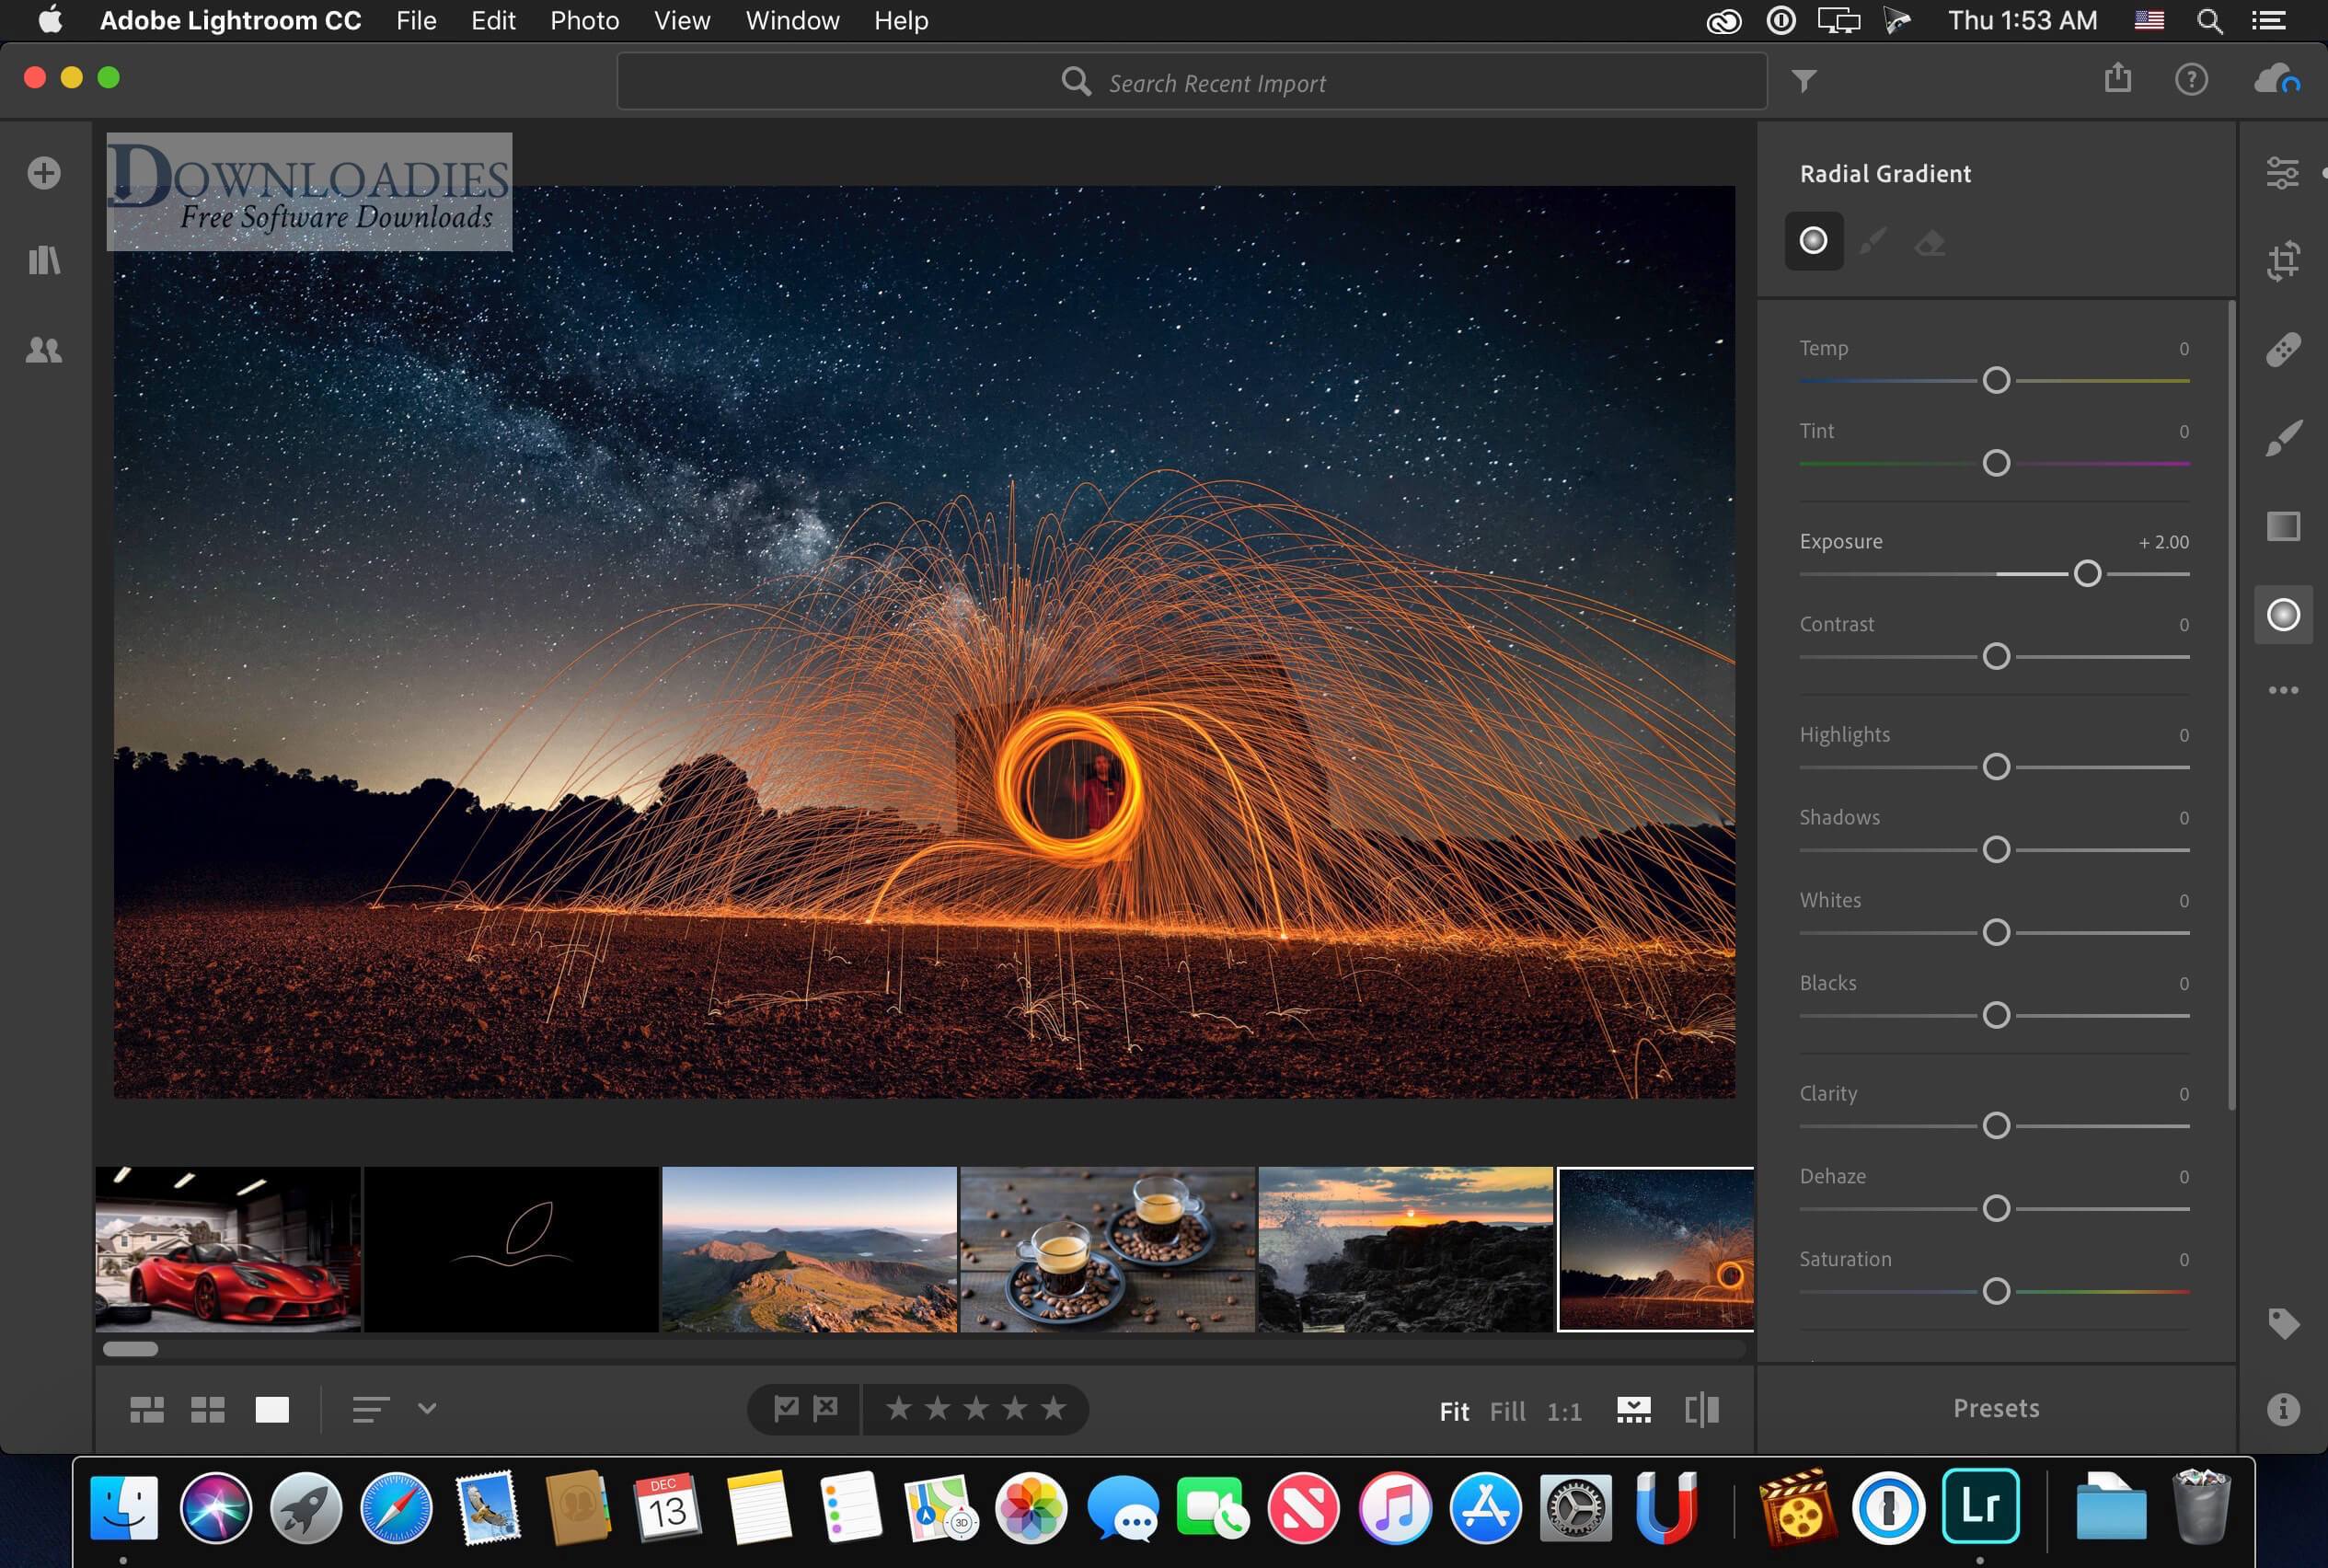 Adobe Photoshop CC 2020 v21.1.0 Crack FREE Download